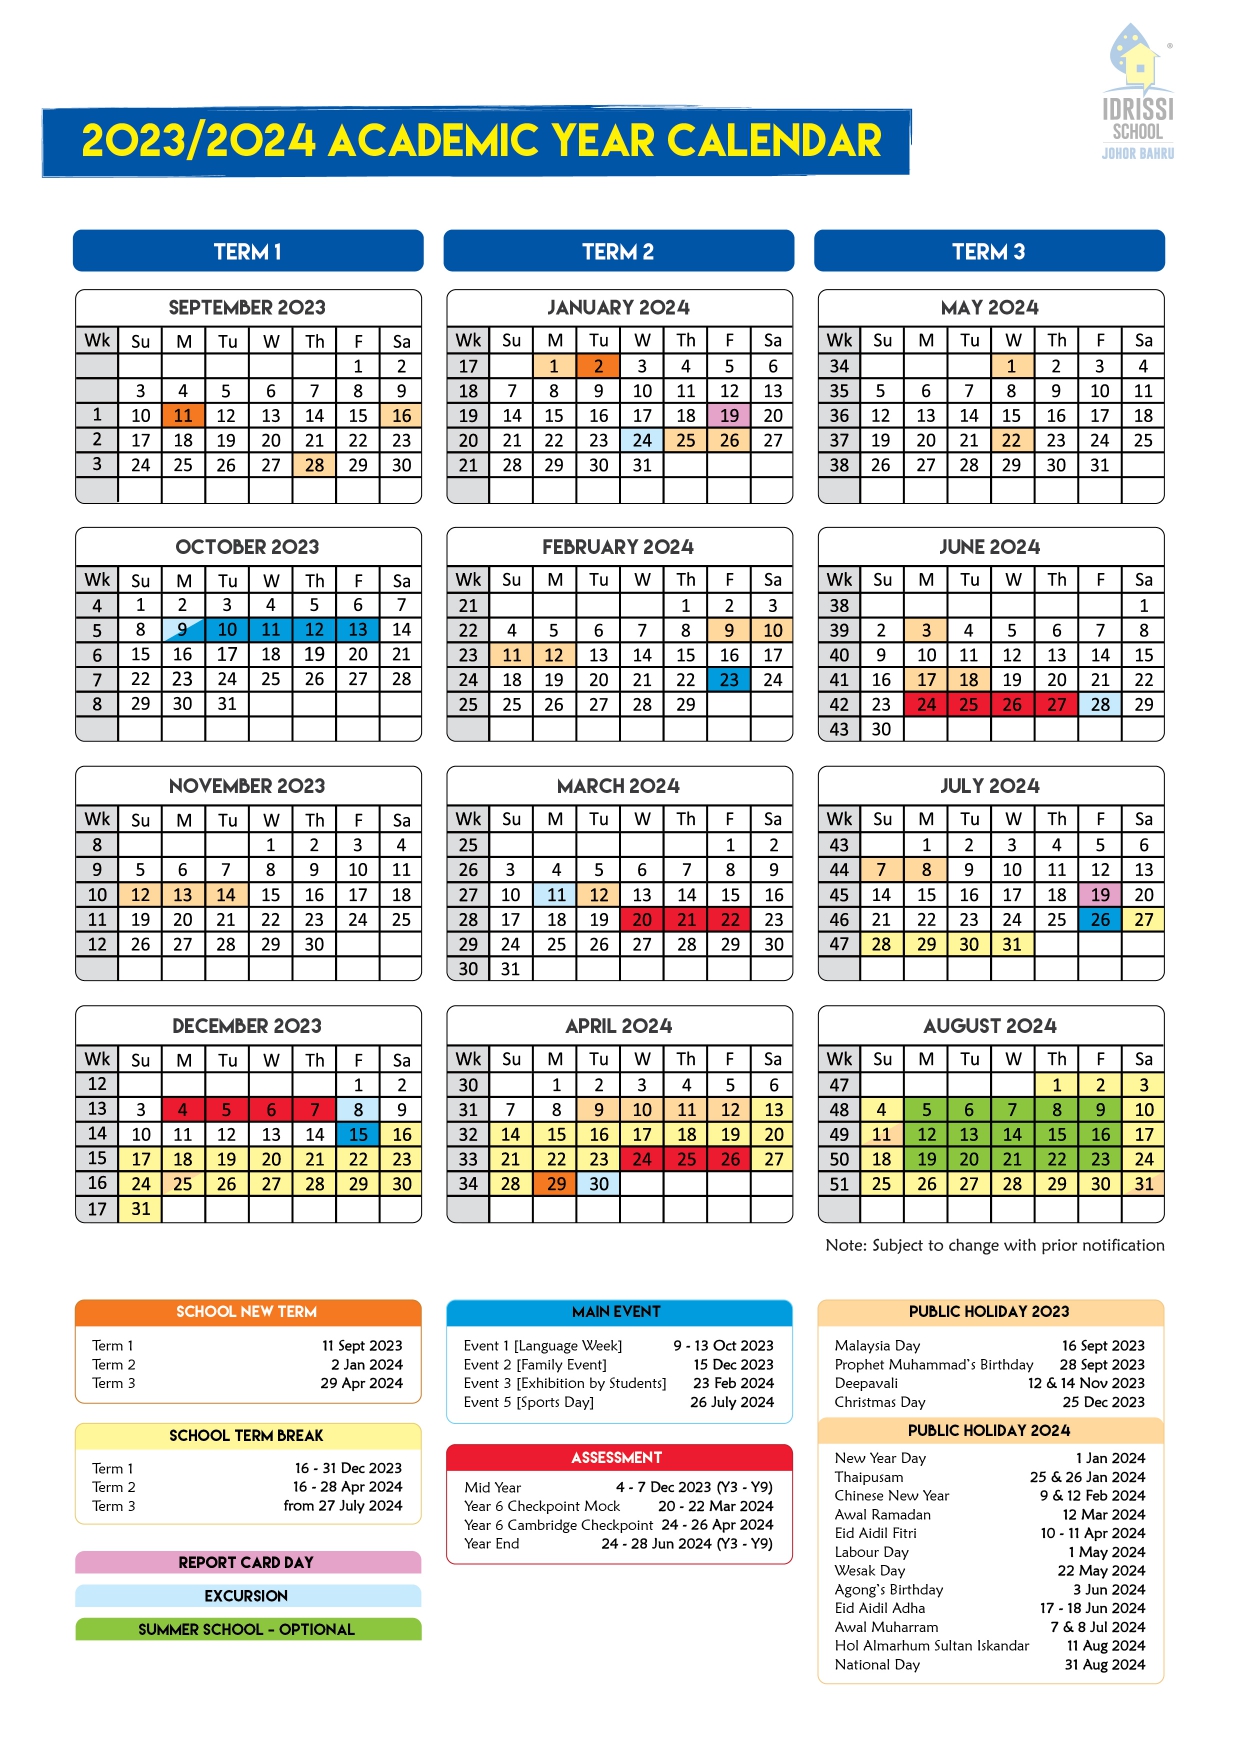 [JB] Academic Calendar 2023-2024_jpg